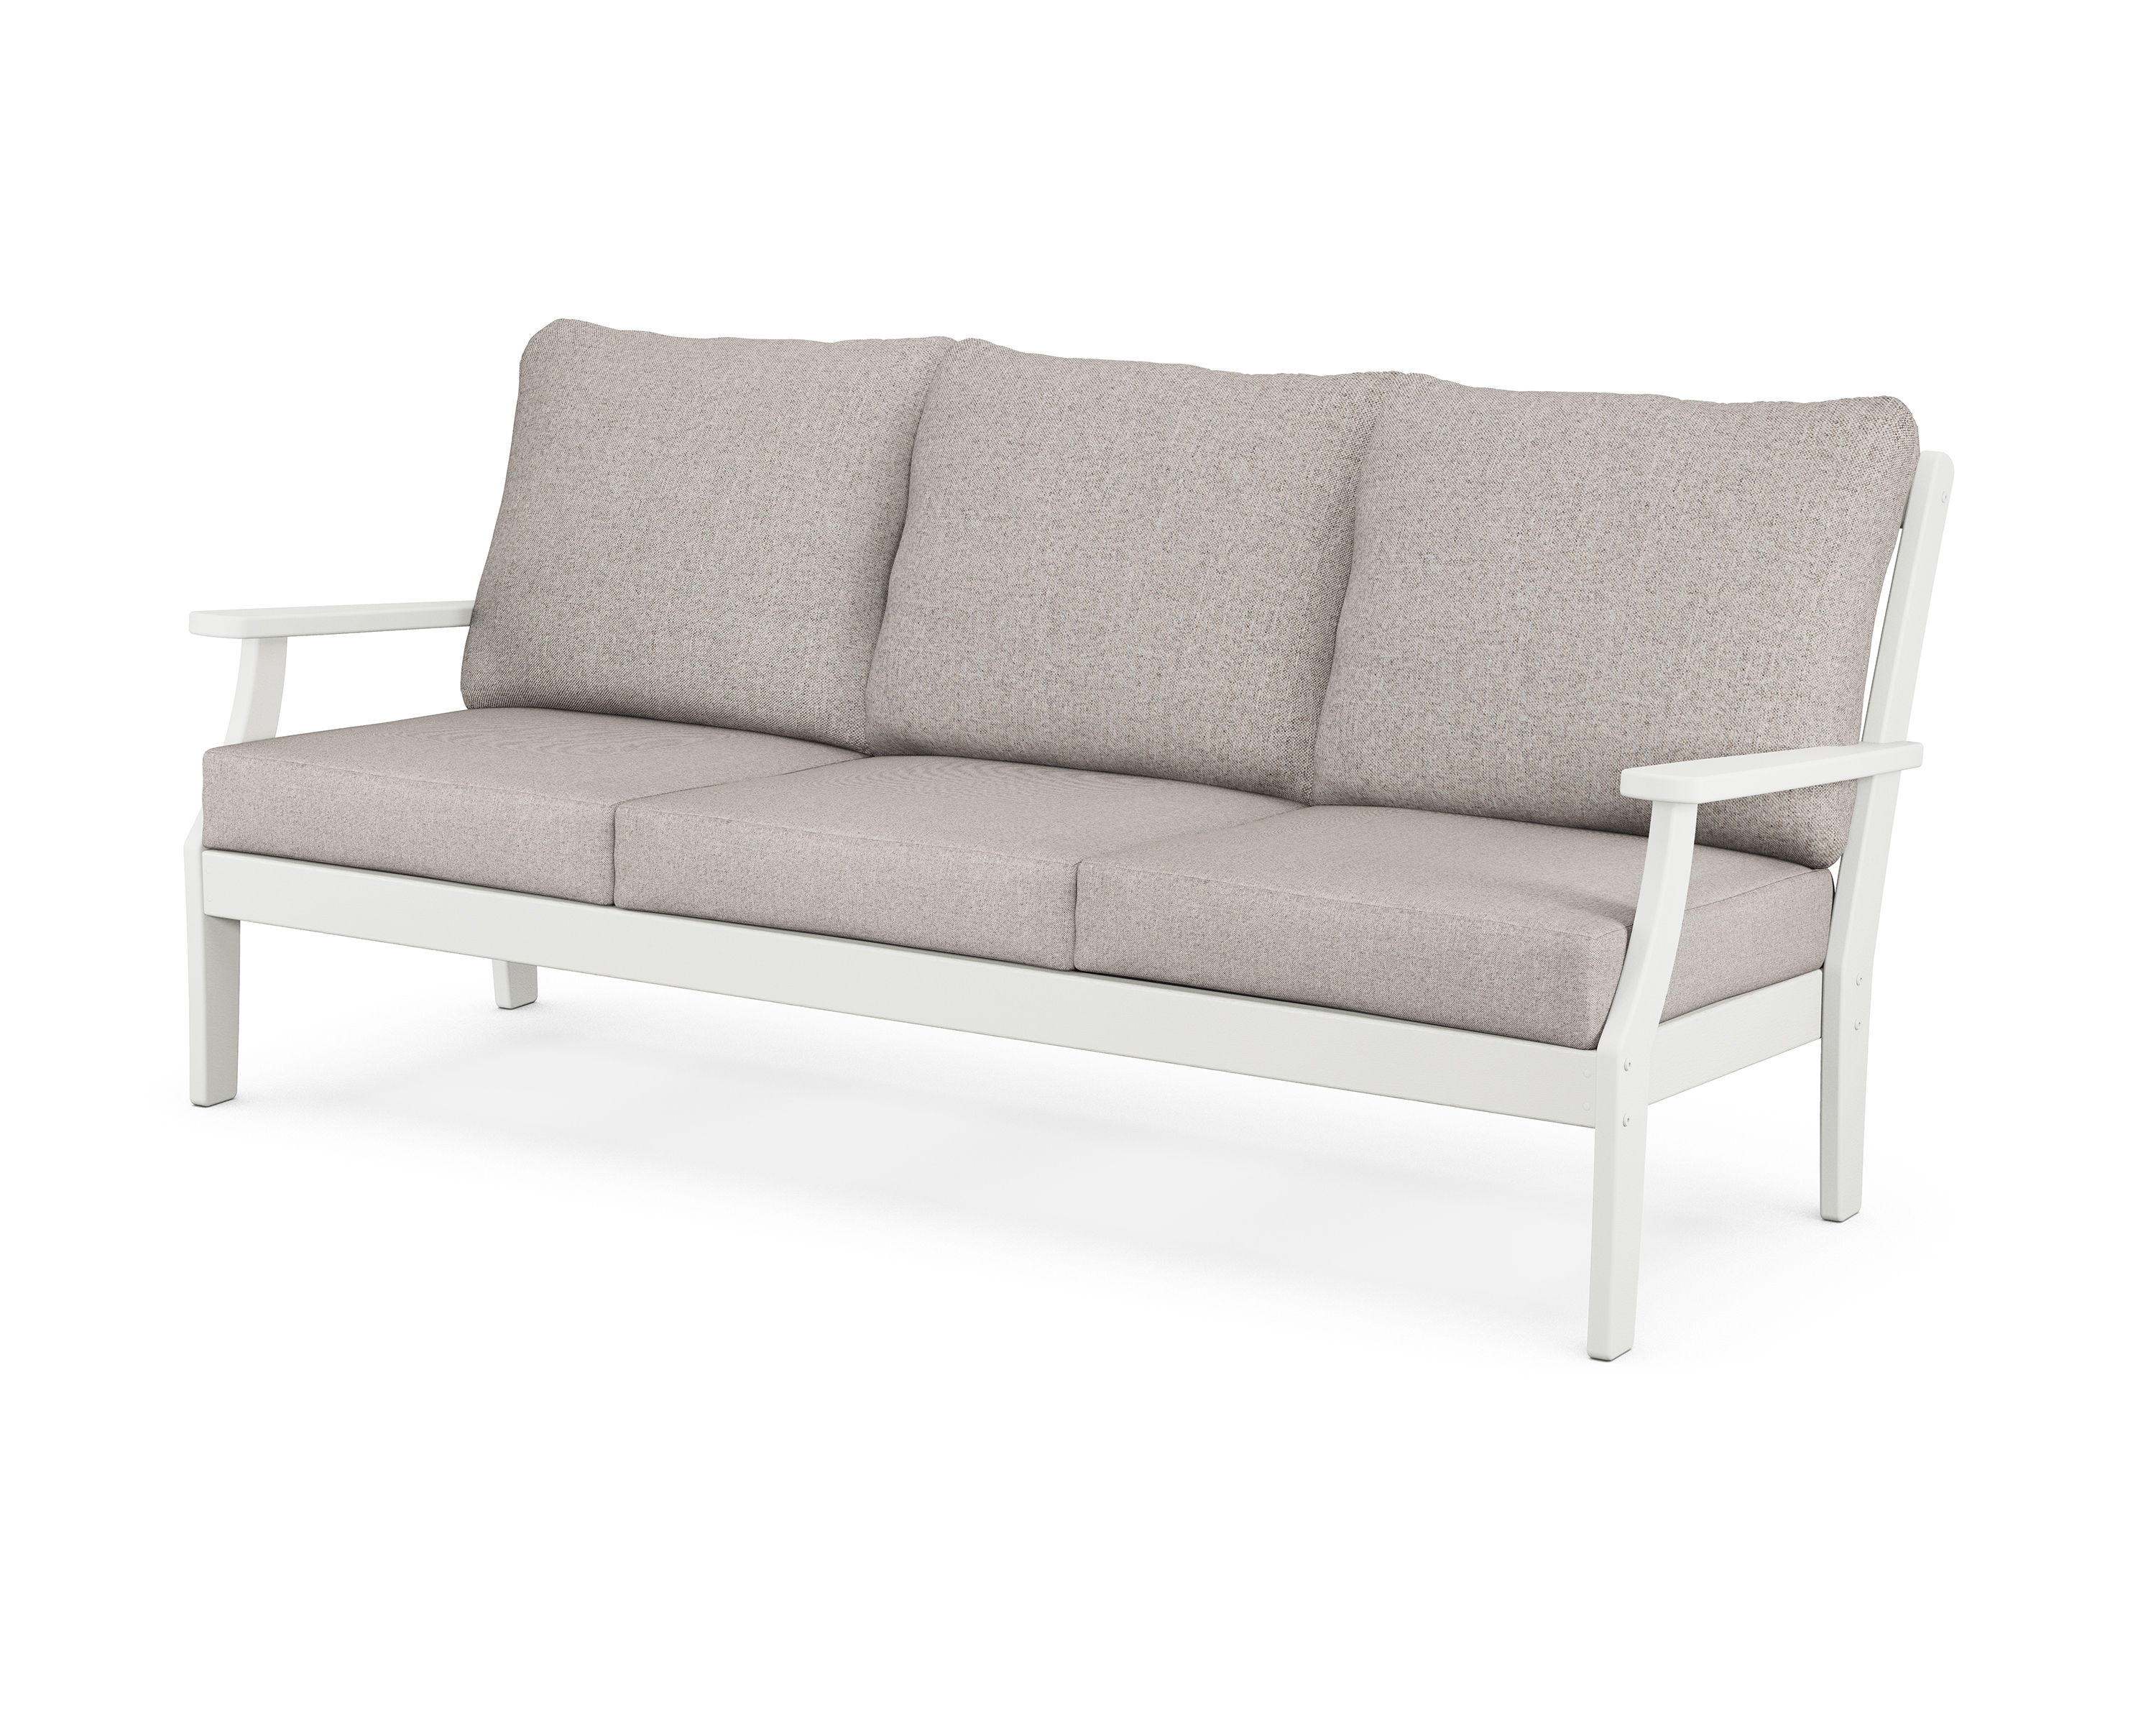 braxton deep seating sofa in vintage white / weathered tweed product image